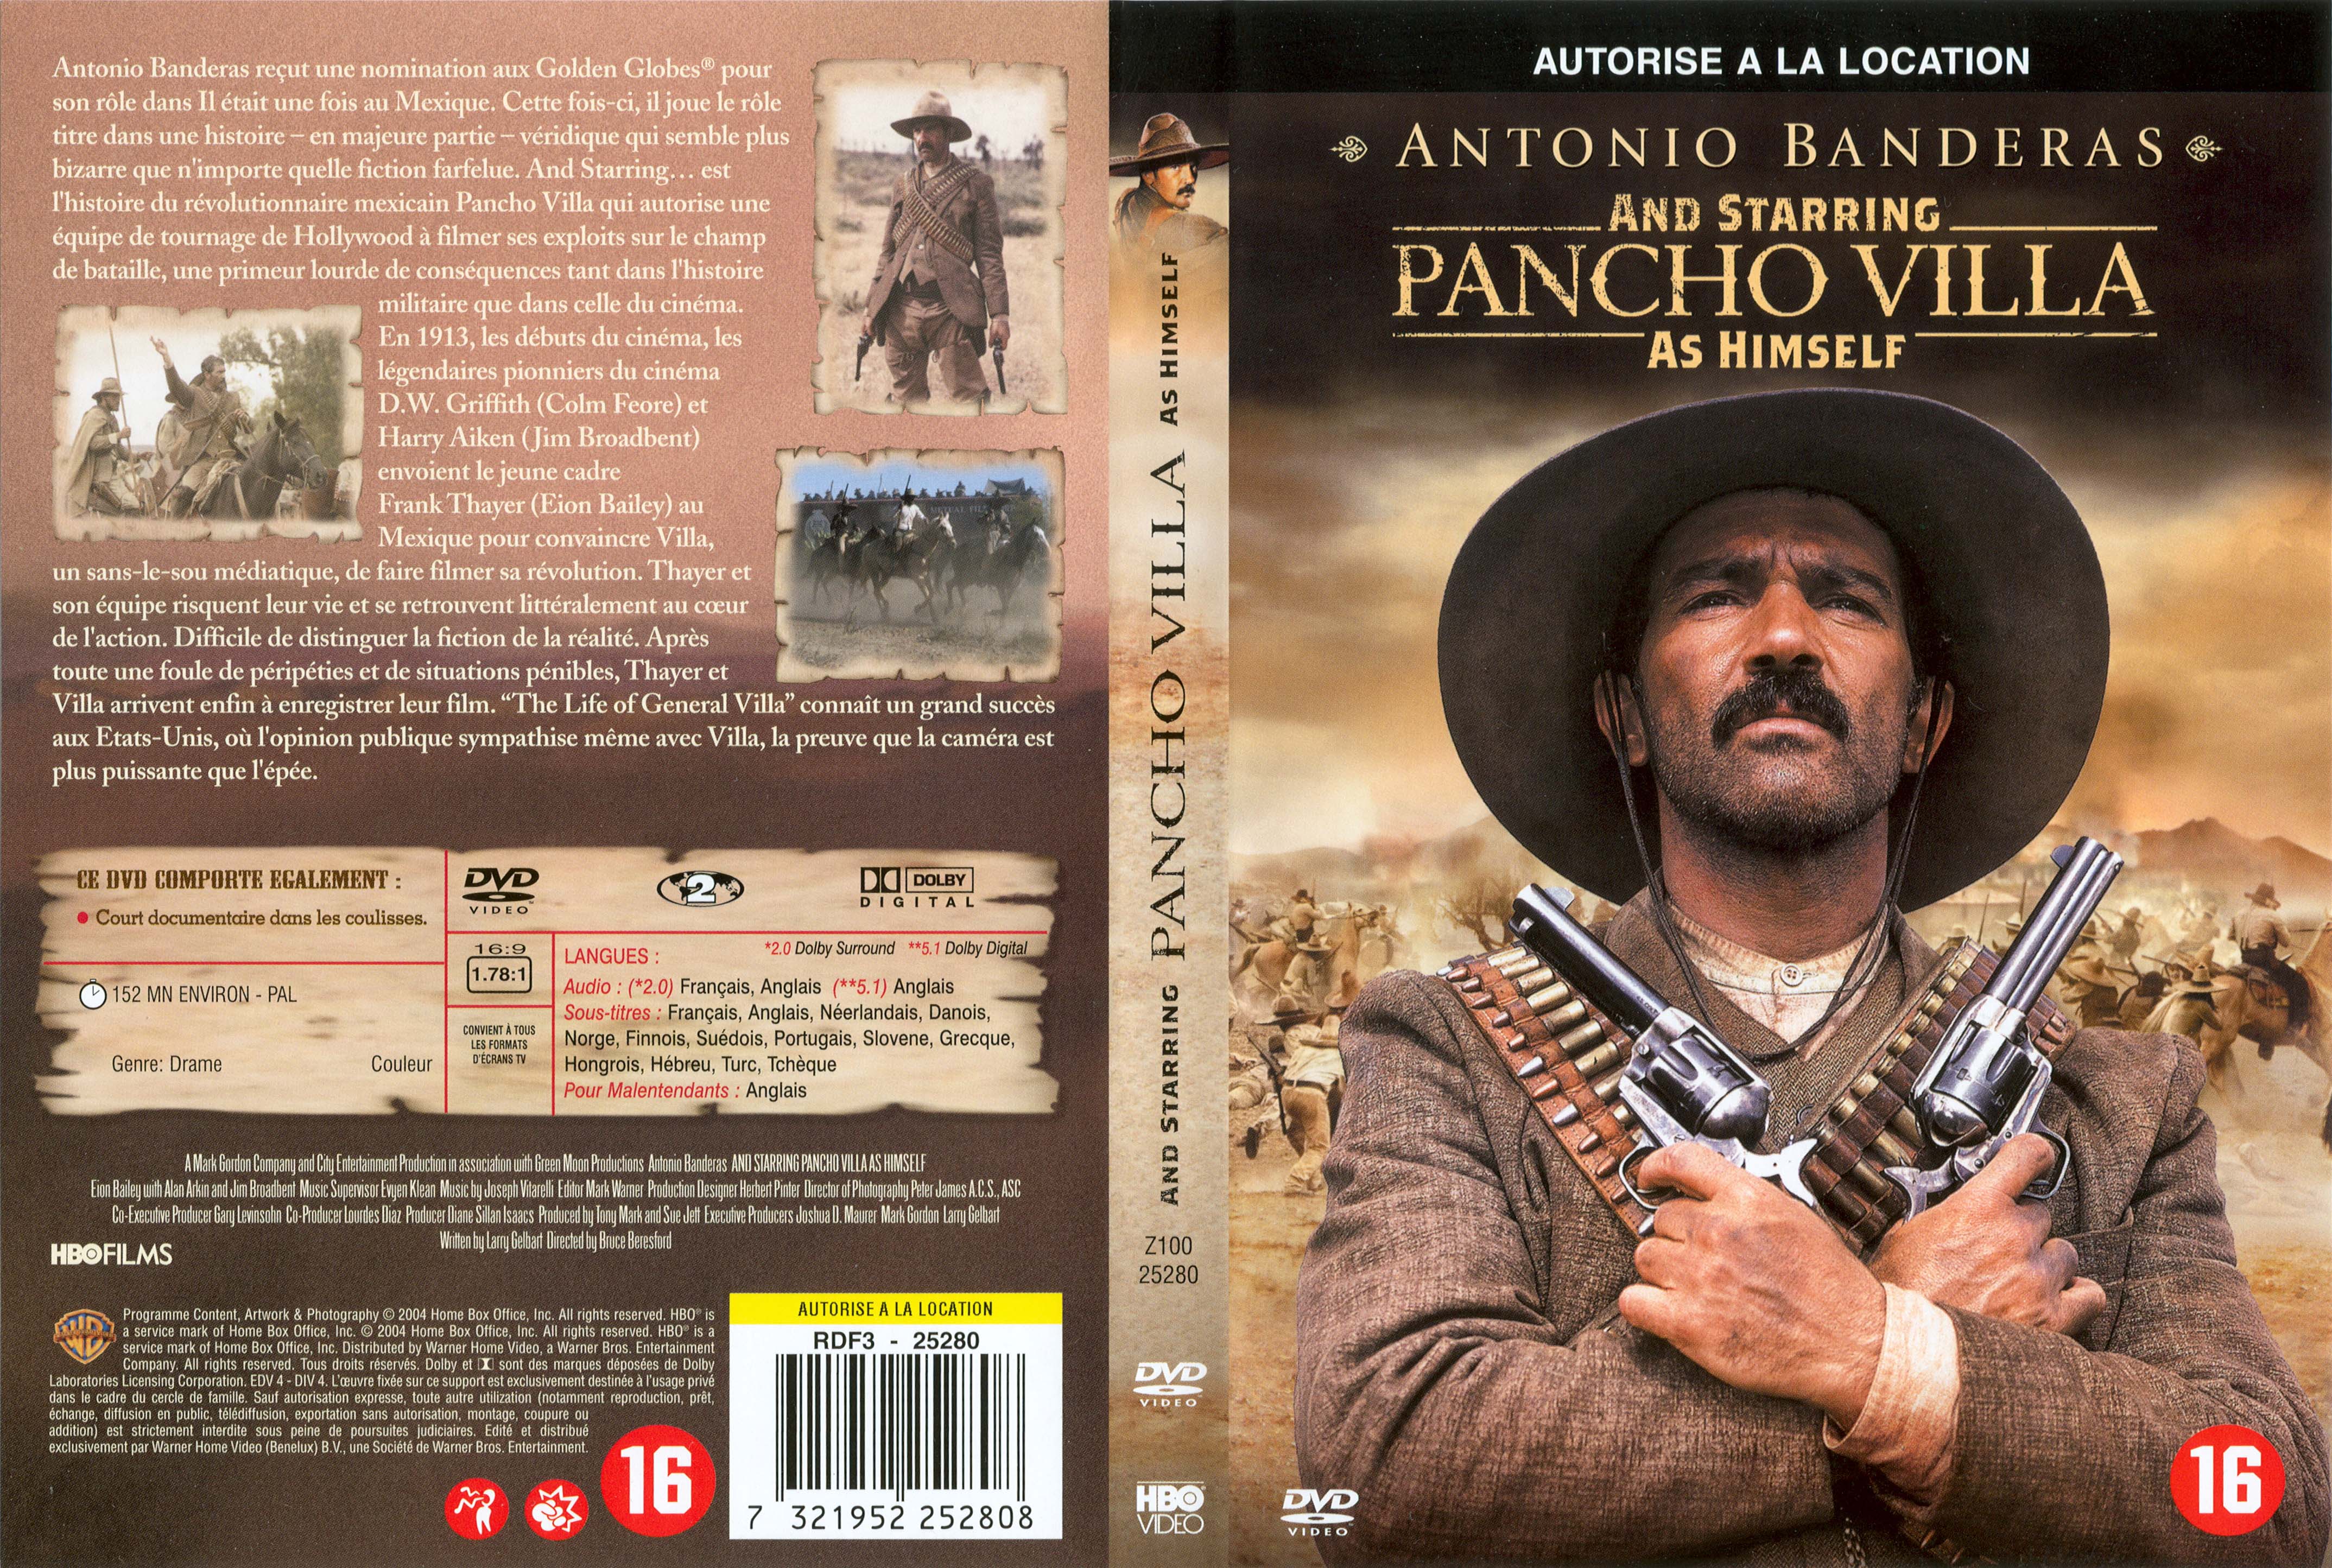 Jaquette DVD Pancho villa v2